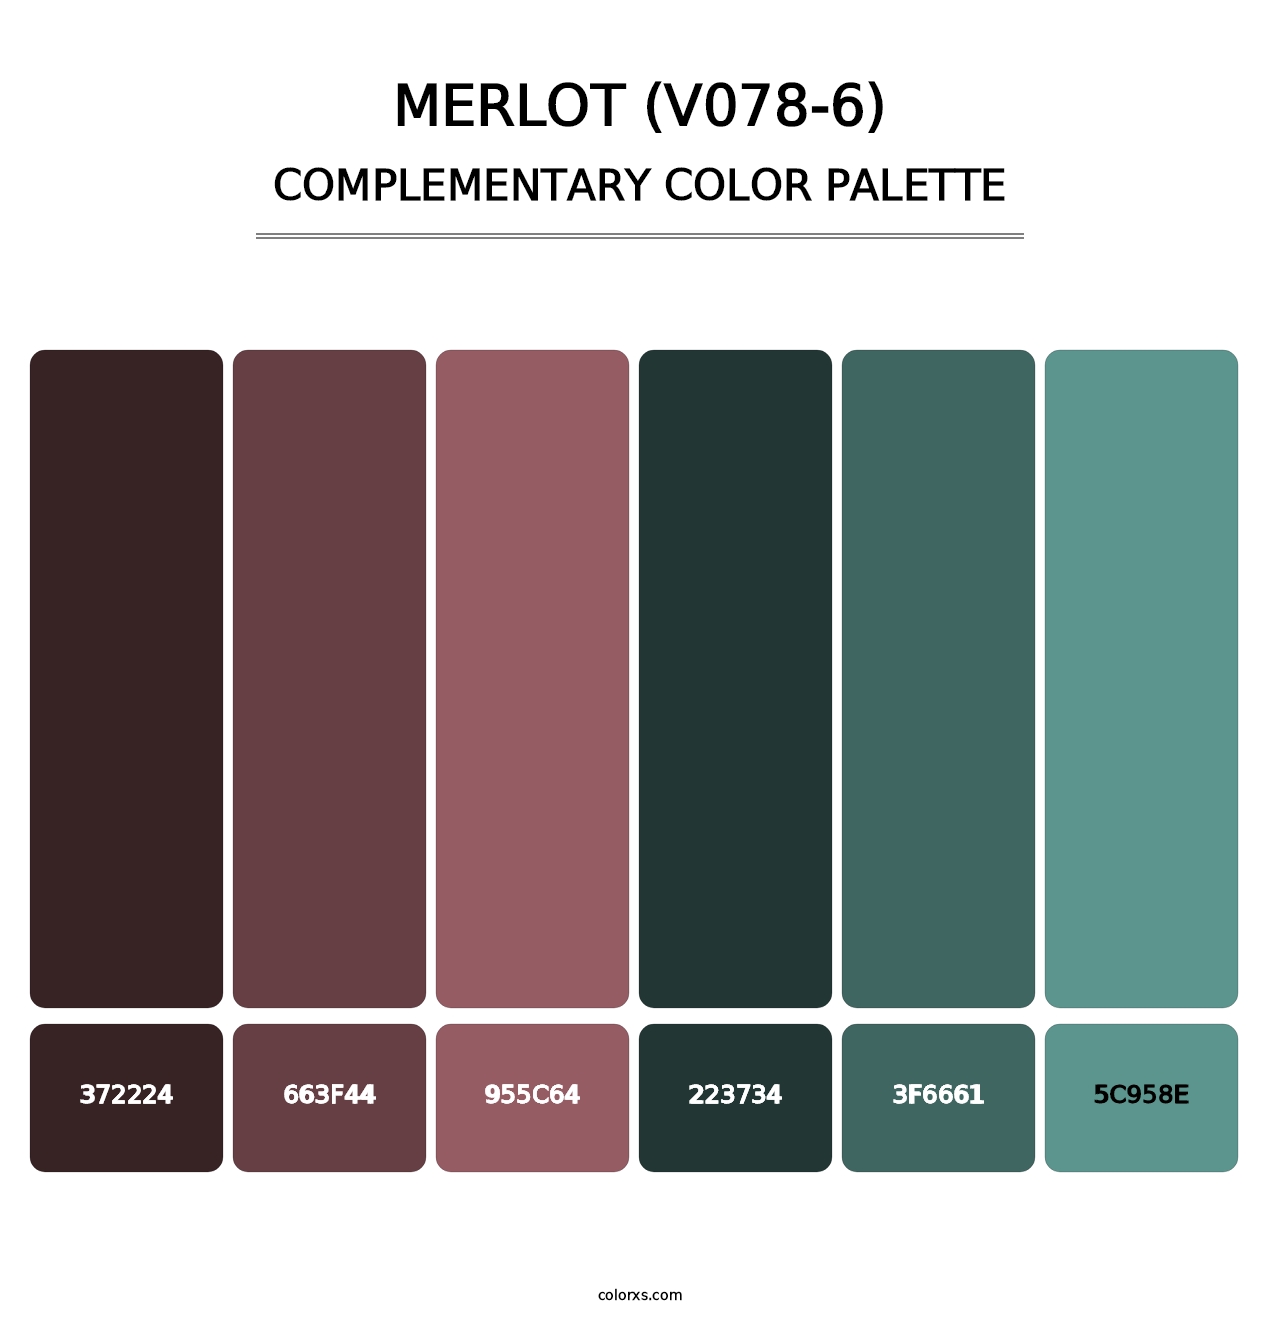 Merlot (V078-6) - Complementary Color Palette